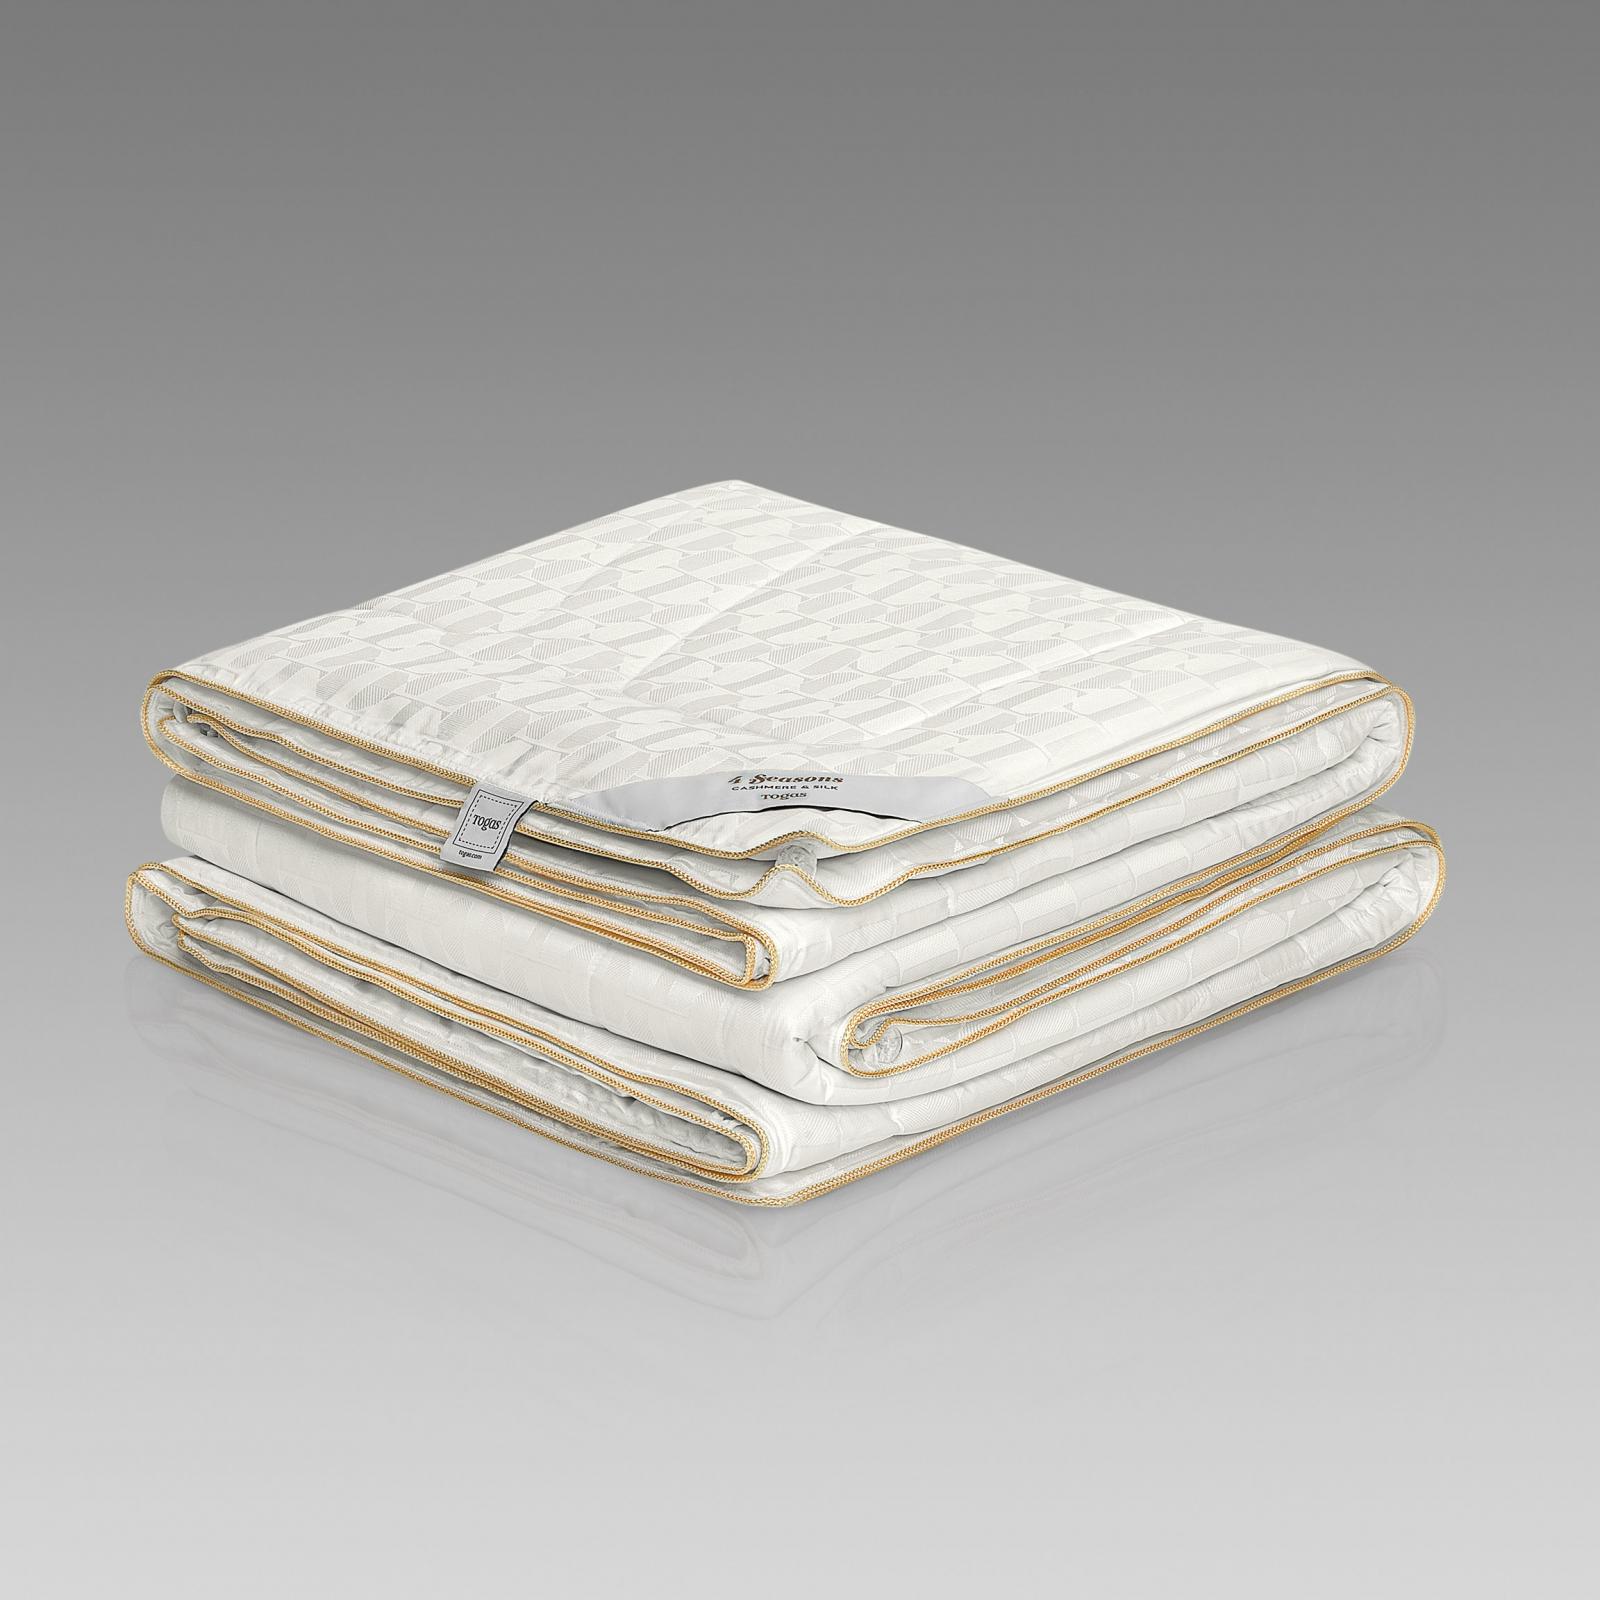 Одеяло Togas 4 сезона белое 140х200 см (20.04.40.0000) одеяло togas лира белое 140х200 см 20 04 17 0091